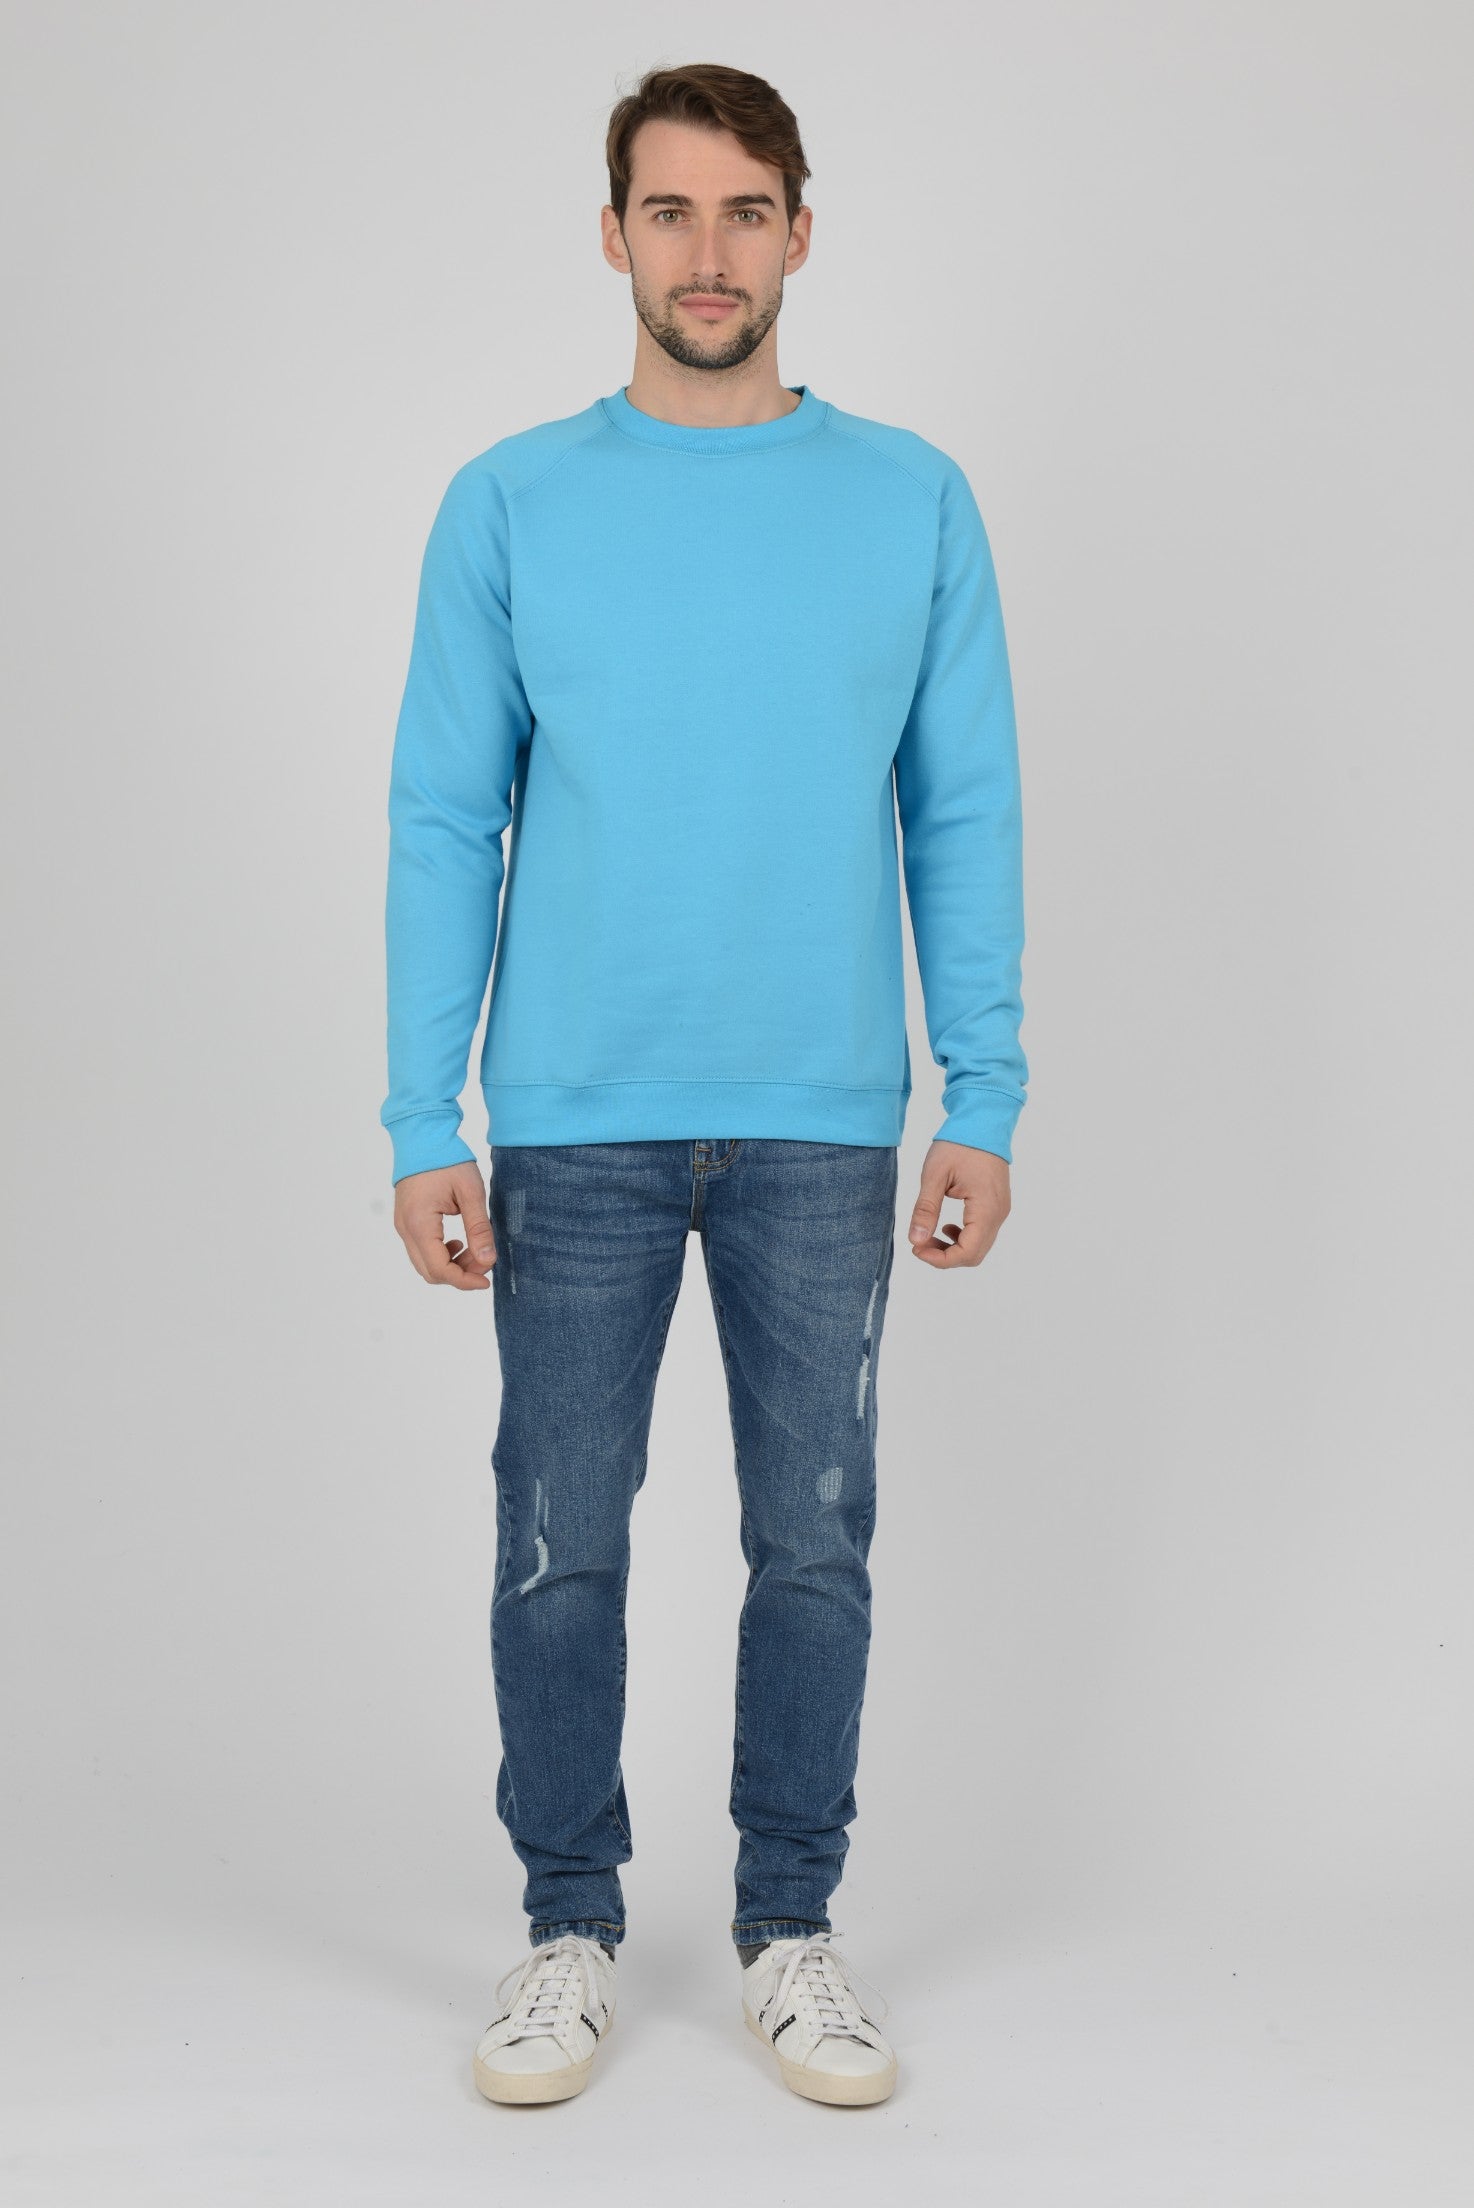 Mens-Raglan-Sweatshirt-Jumper-Azure-Blue